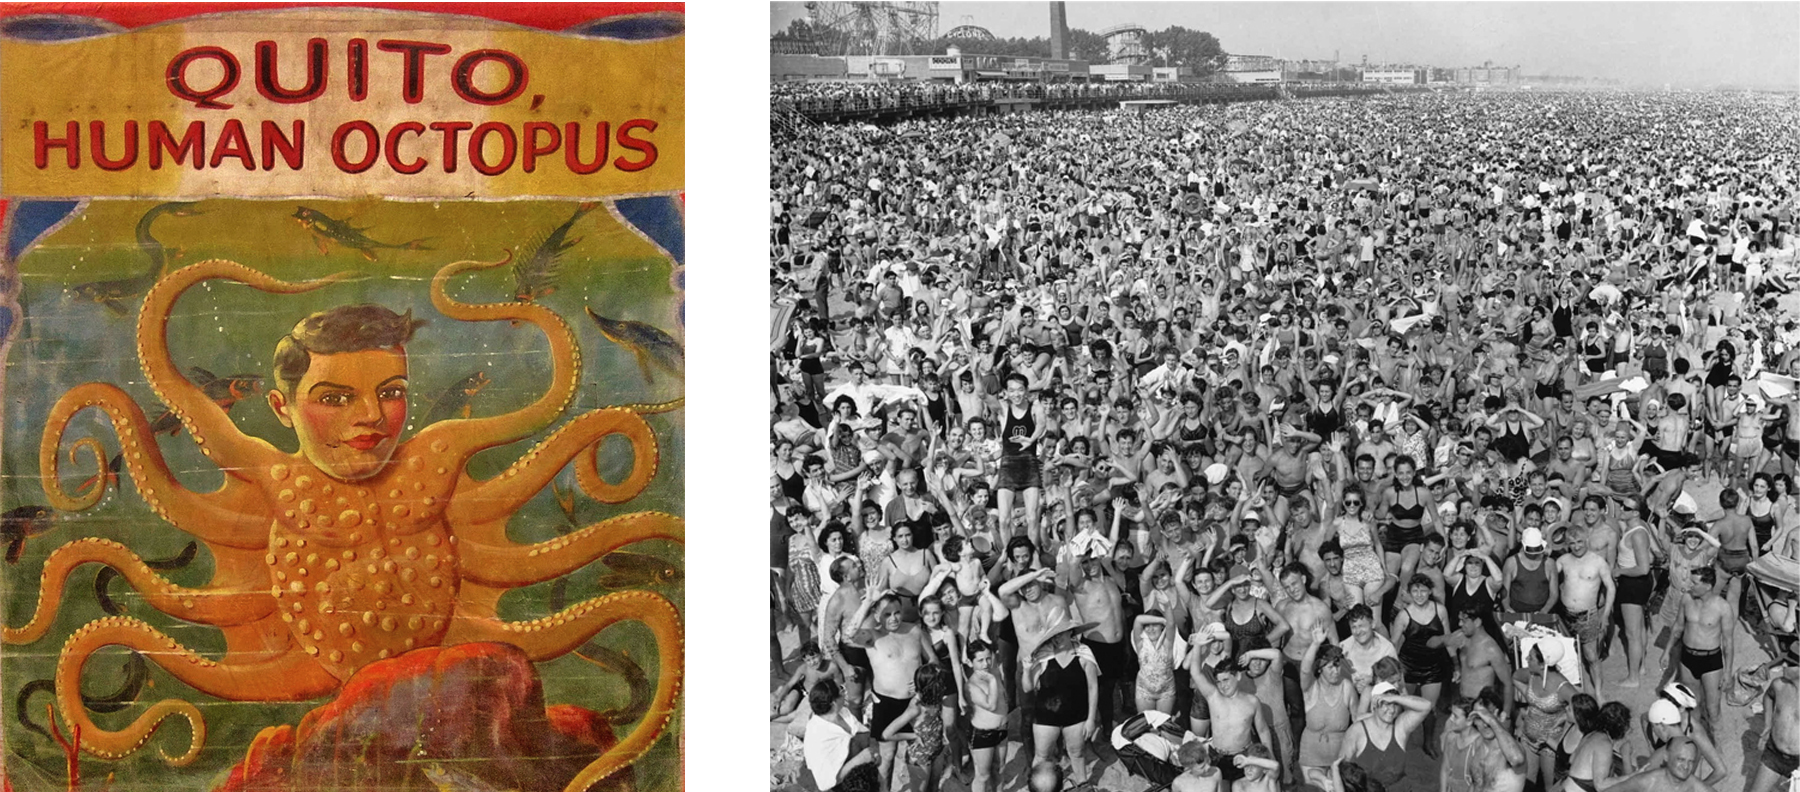  L: Quito, Human Octopus, 1940. R: Weegee, Coney Island Beach, 1940